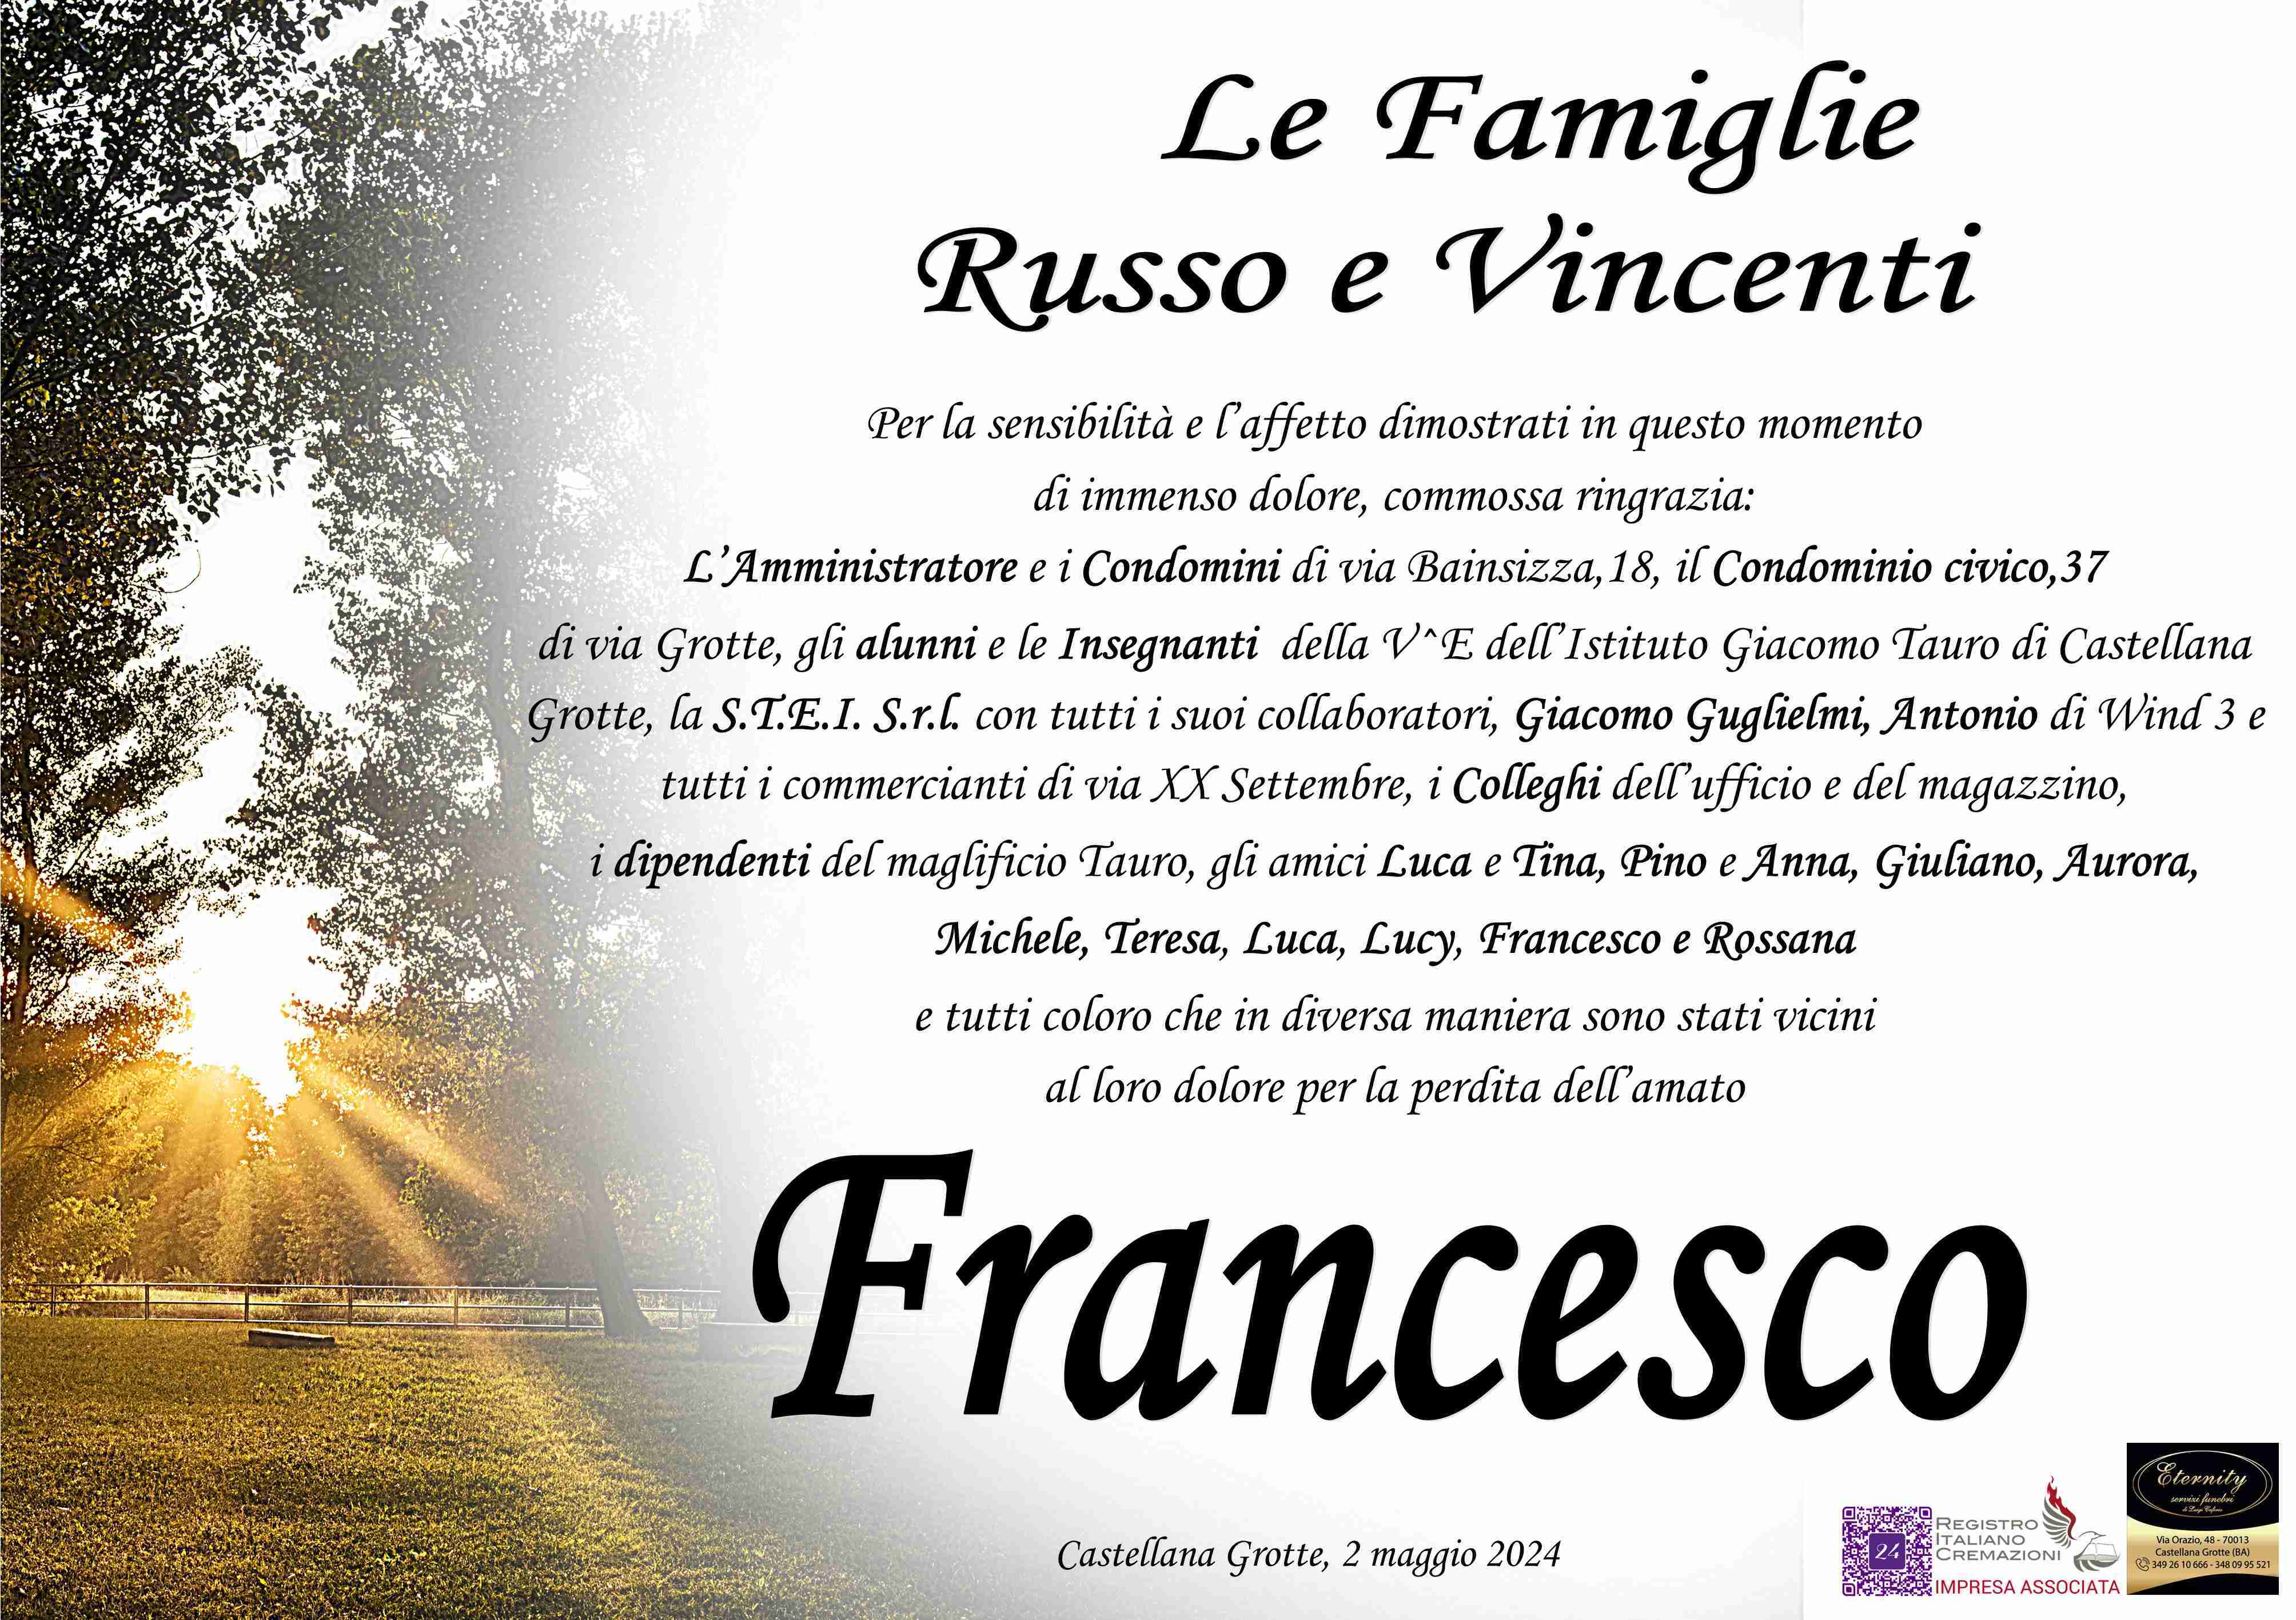 Francesco Vincenti